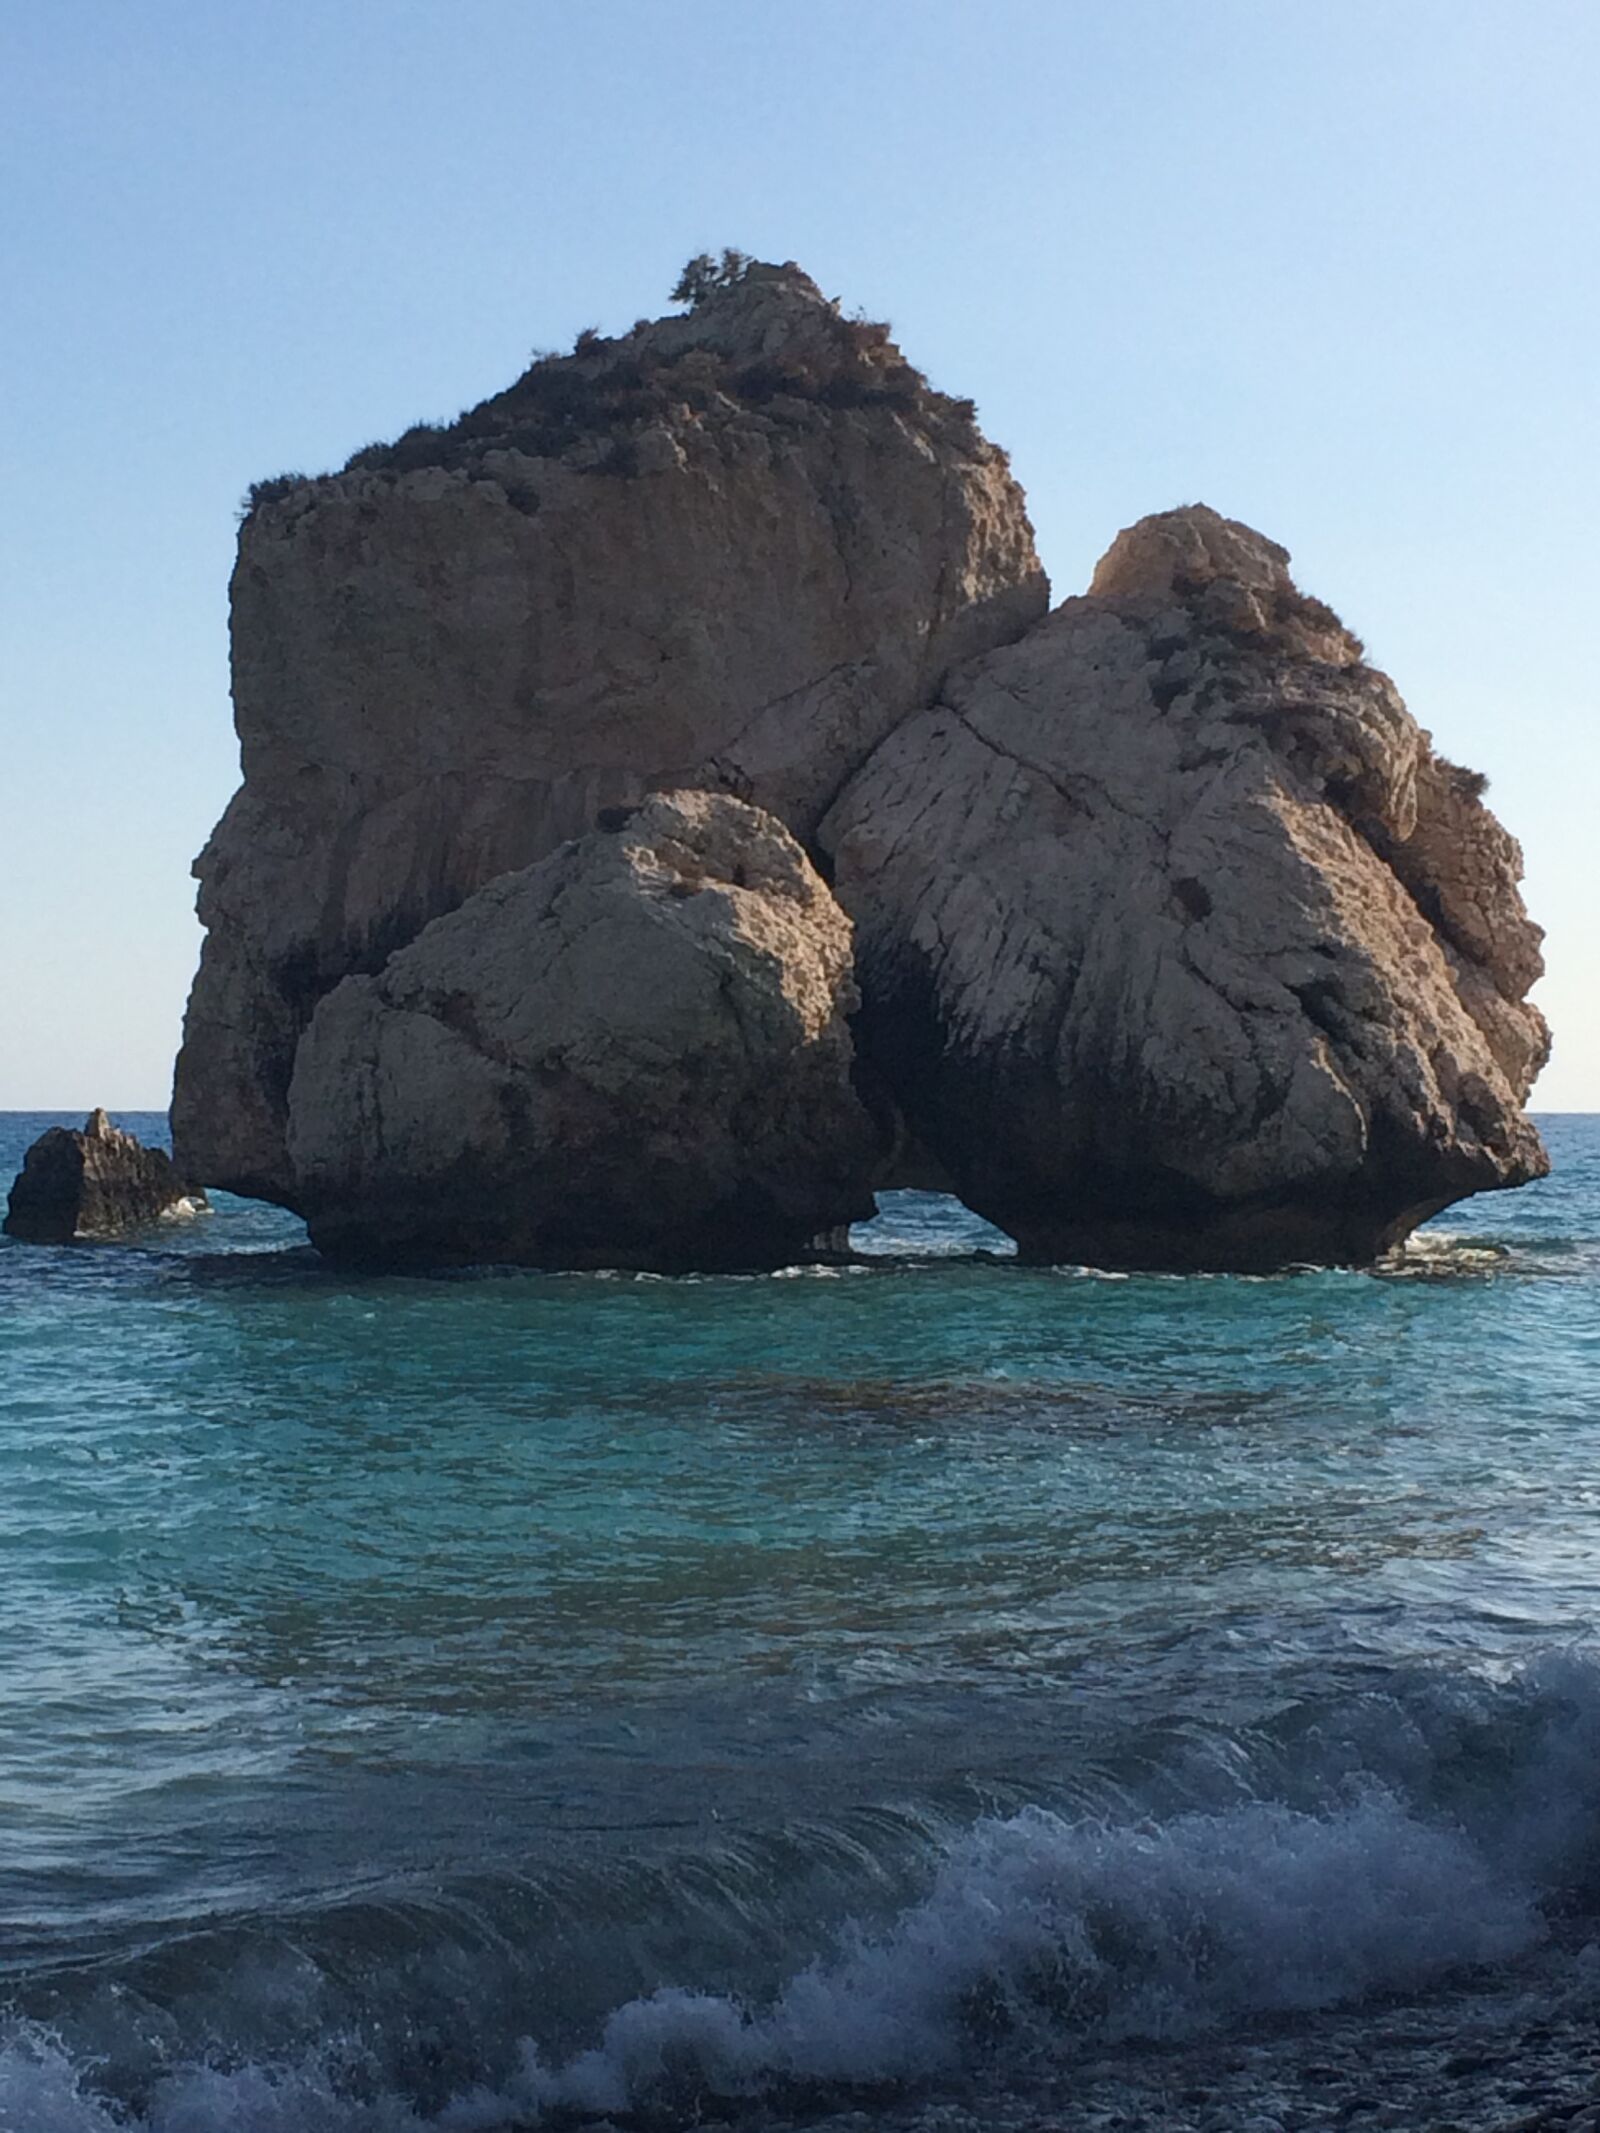 Apple iPhone 5s + iPhone 5s back camera 4.15mm f/2.2 sample photo. Aphrodite rock, sea, cyprus photography